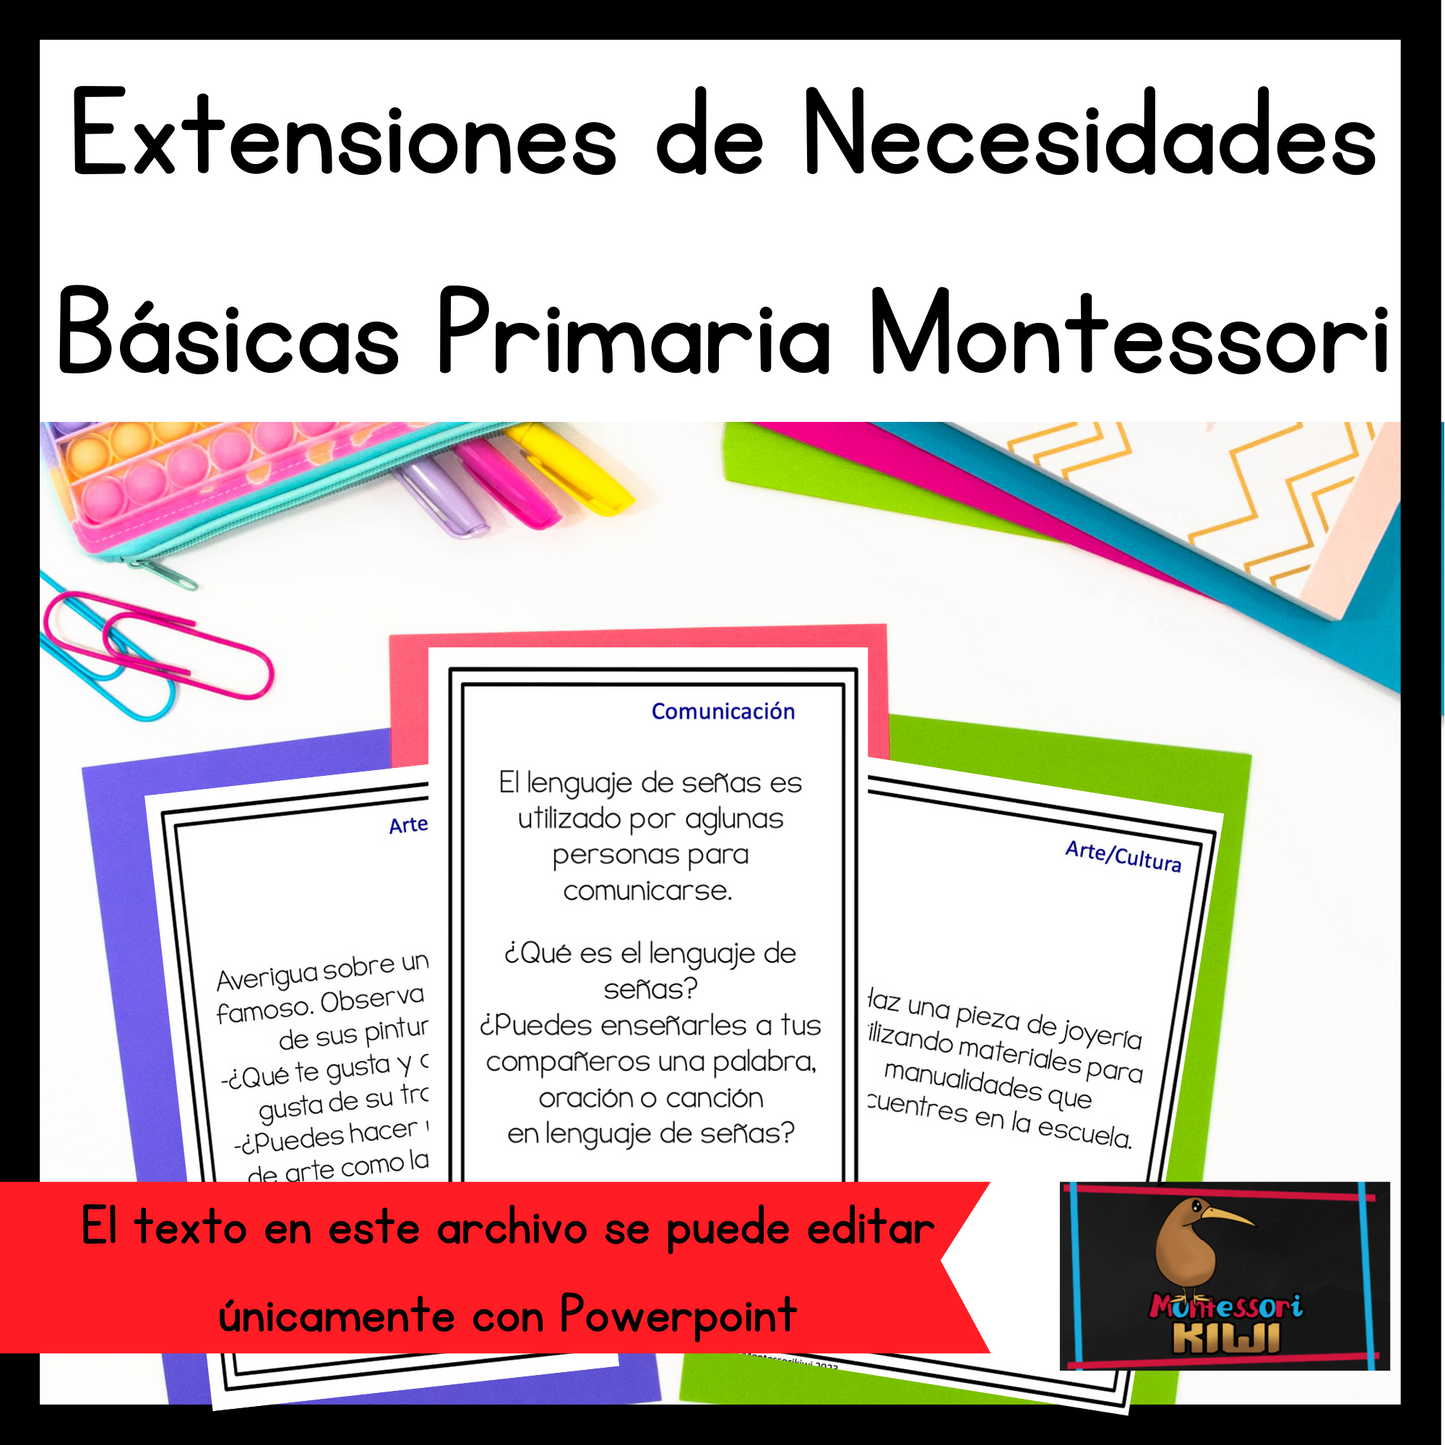 Extensiones de Necesidades Básicas Primaria Montessori (Fundamental Needs Extensions) - montessorikiwi